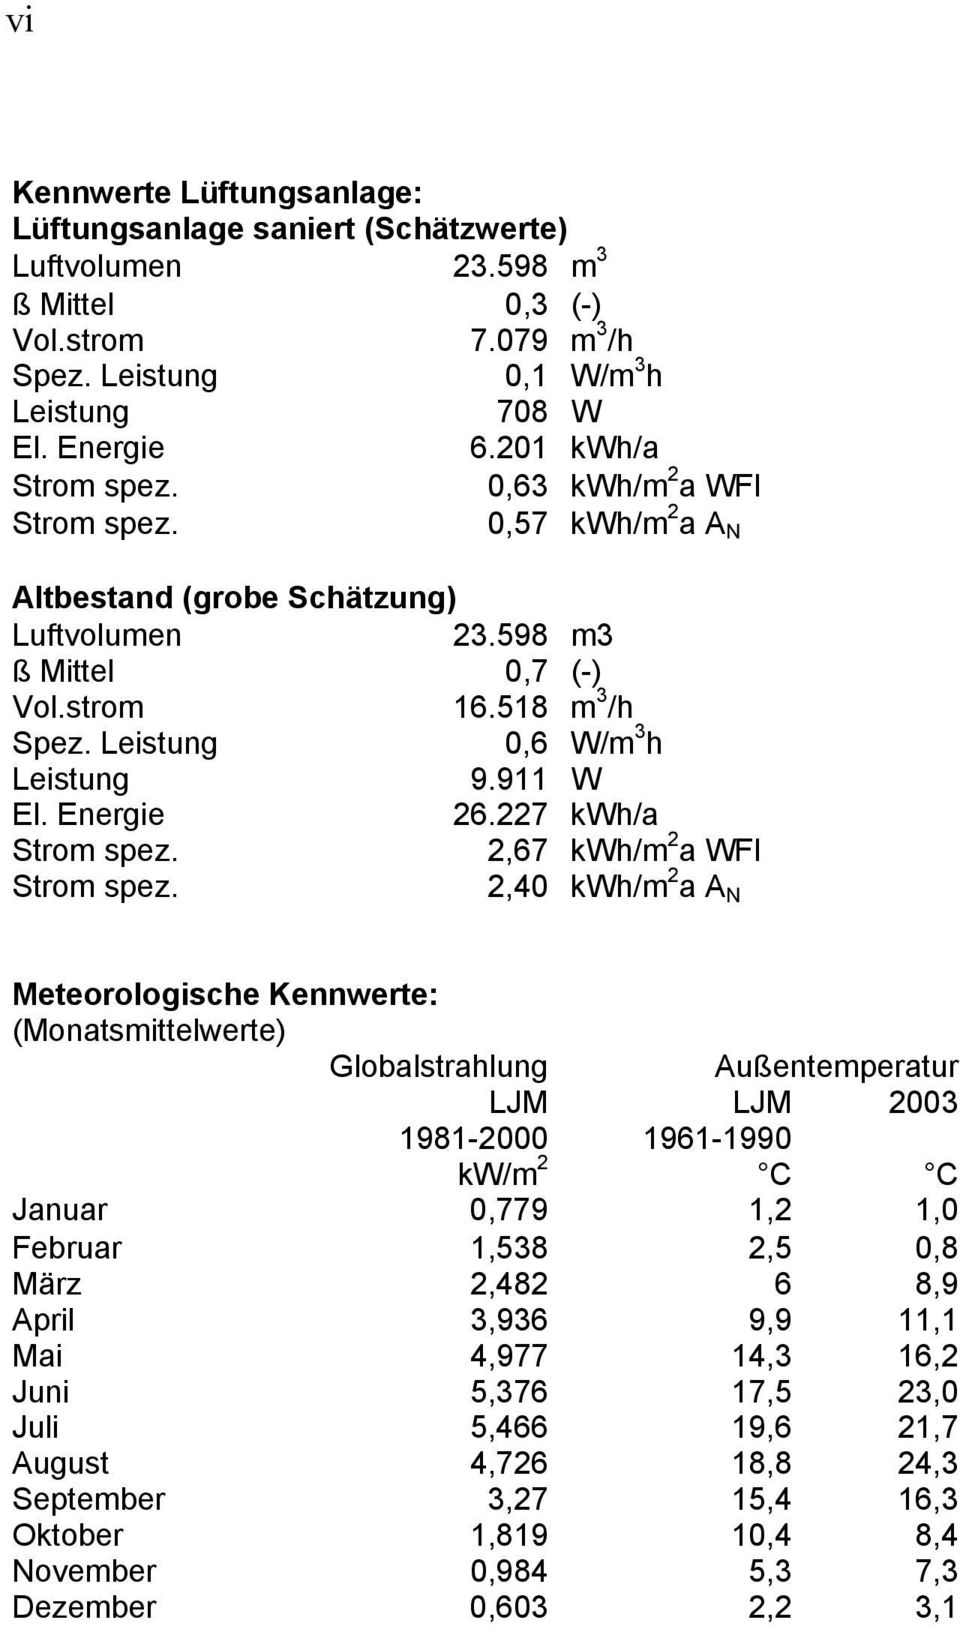 227 kwh/a 2,67 kwh/m 2 a WFl 2,40 kwh/m 2 a A N Meteorologische Kennwerte: (Monatsmittelwerte) Globalstrahlung Außentemperatur LJM LJM 2003 1981-2000 1961-1990 kw/m 2 C C Januar 0,779 1,2 1,0 Februar